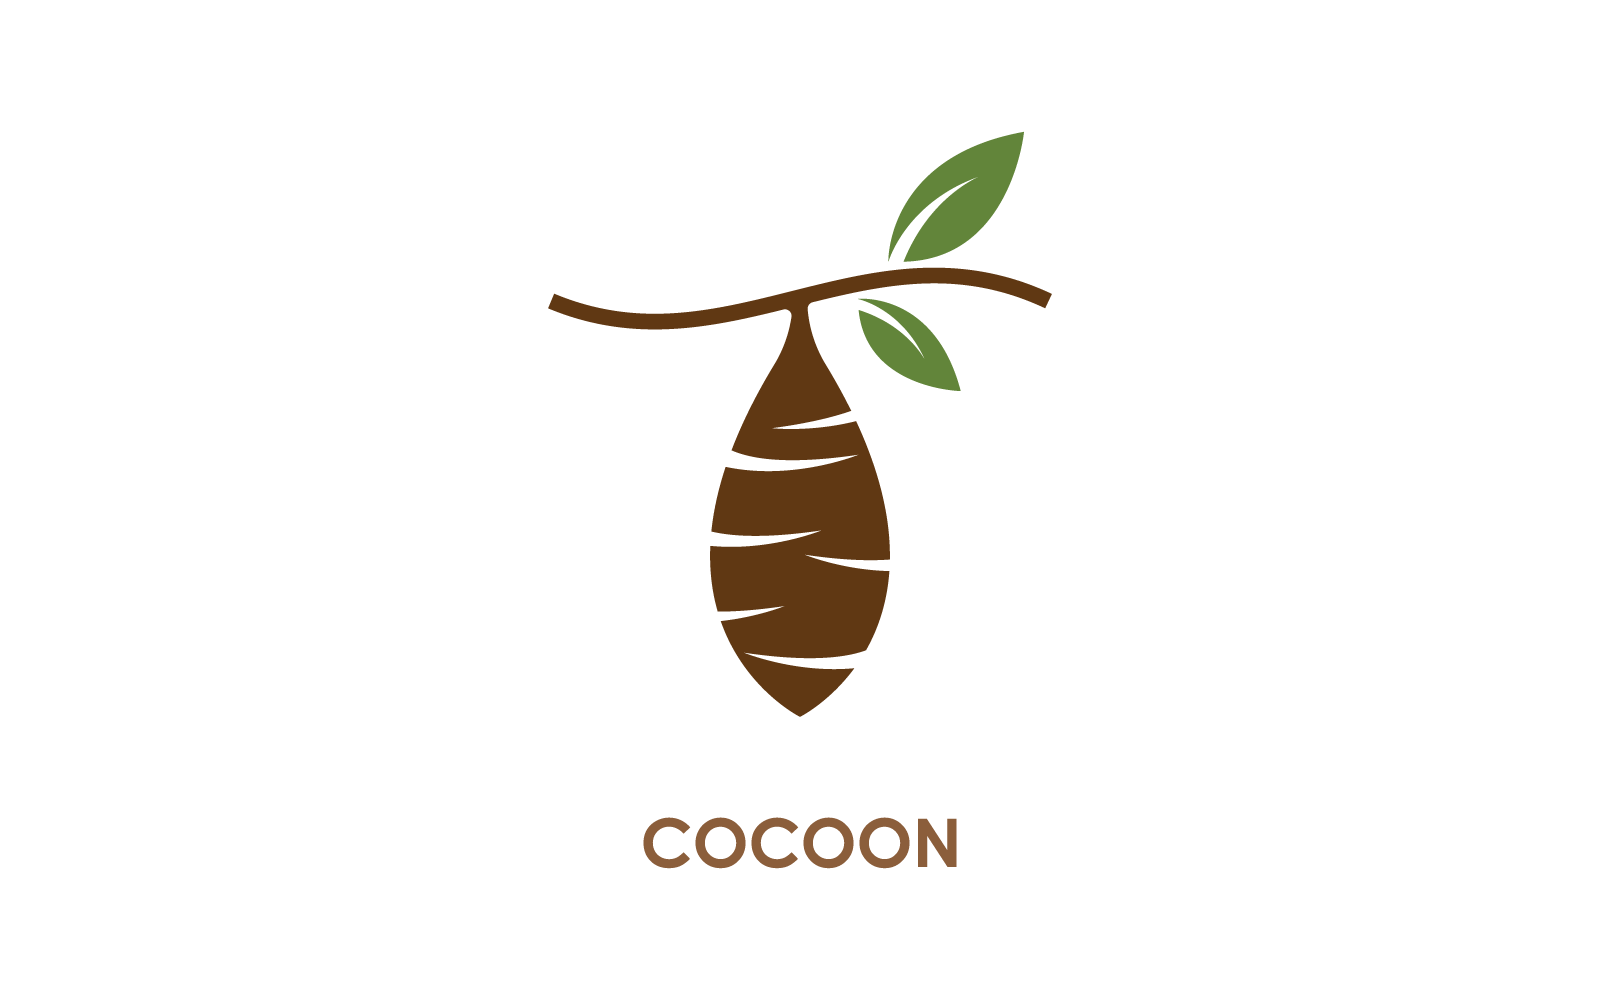 Cocoon illustration logo vector design Logo Template